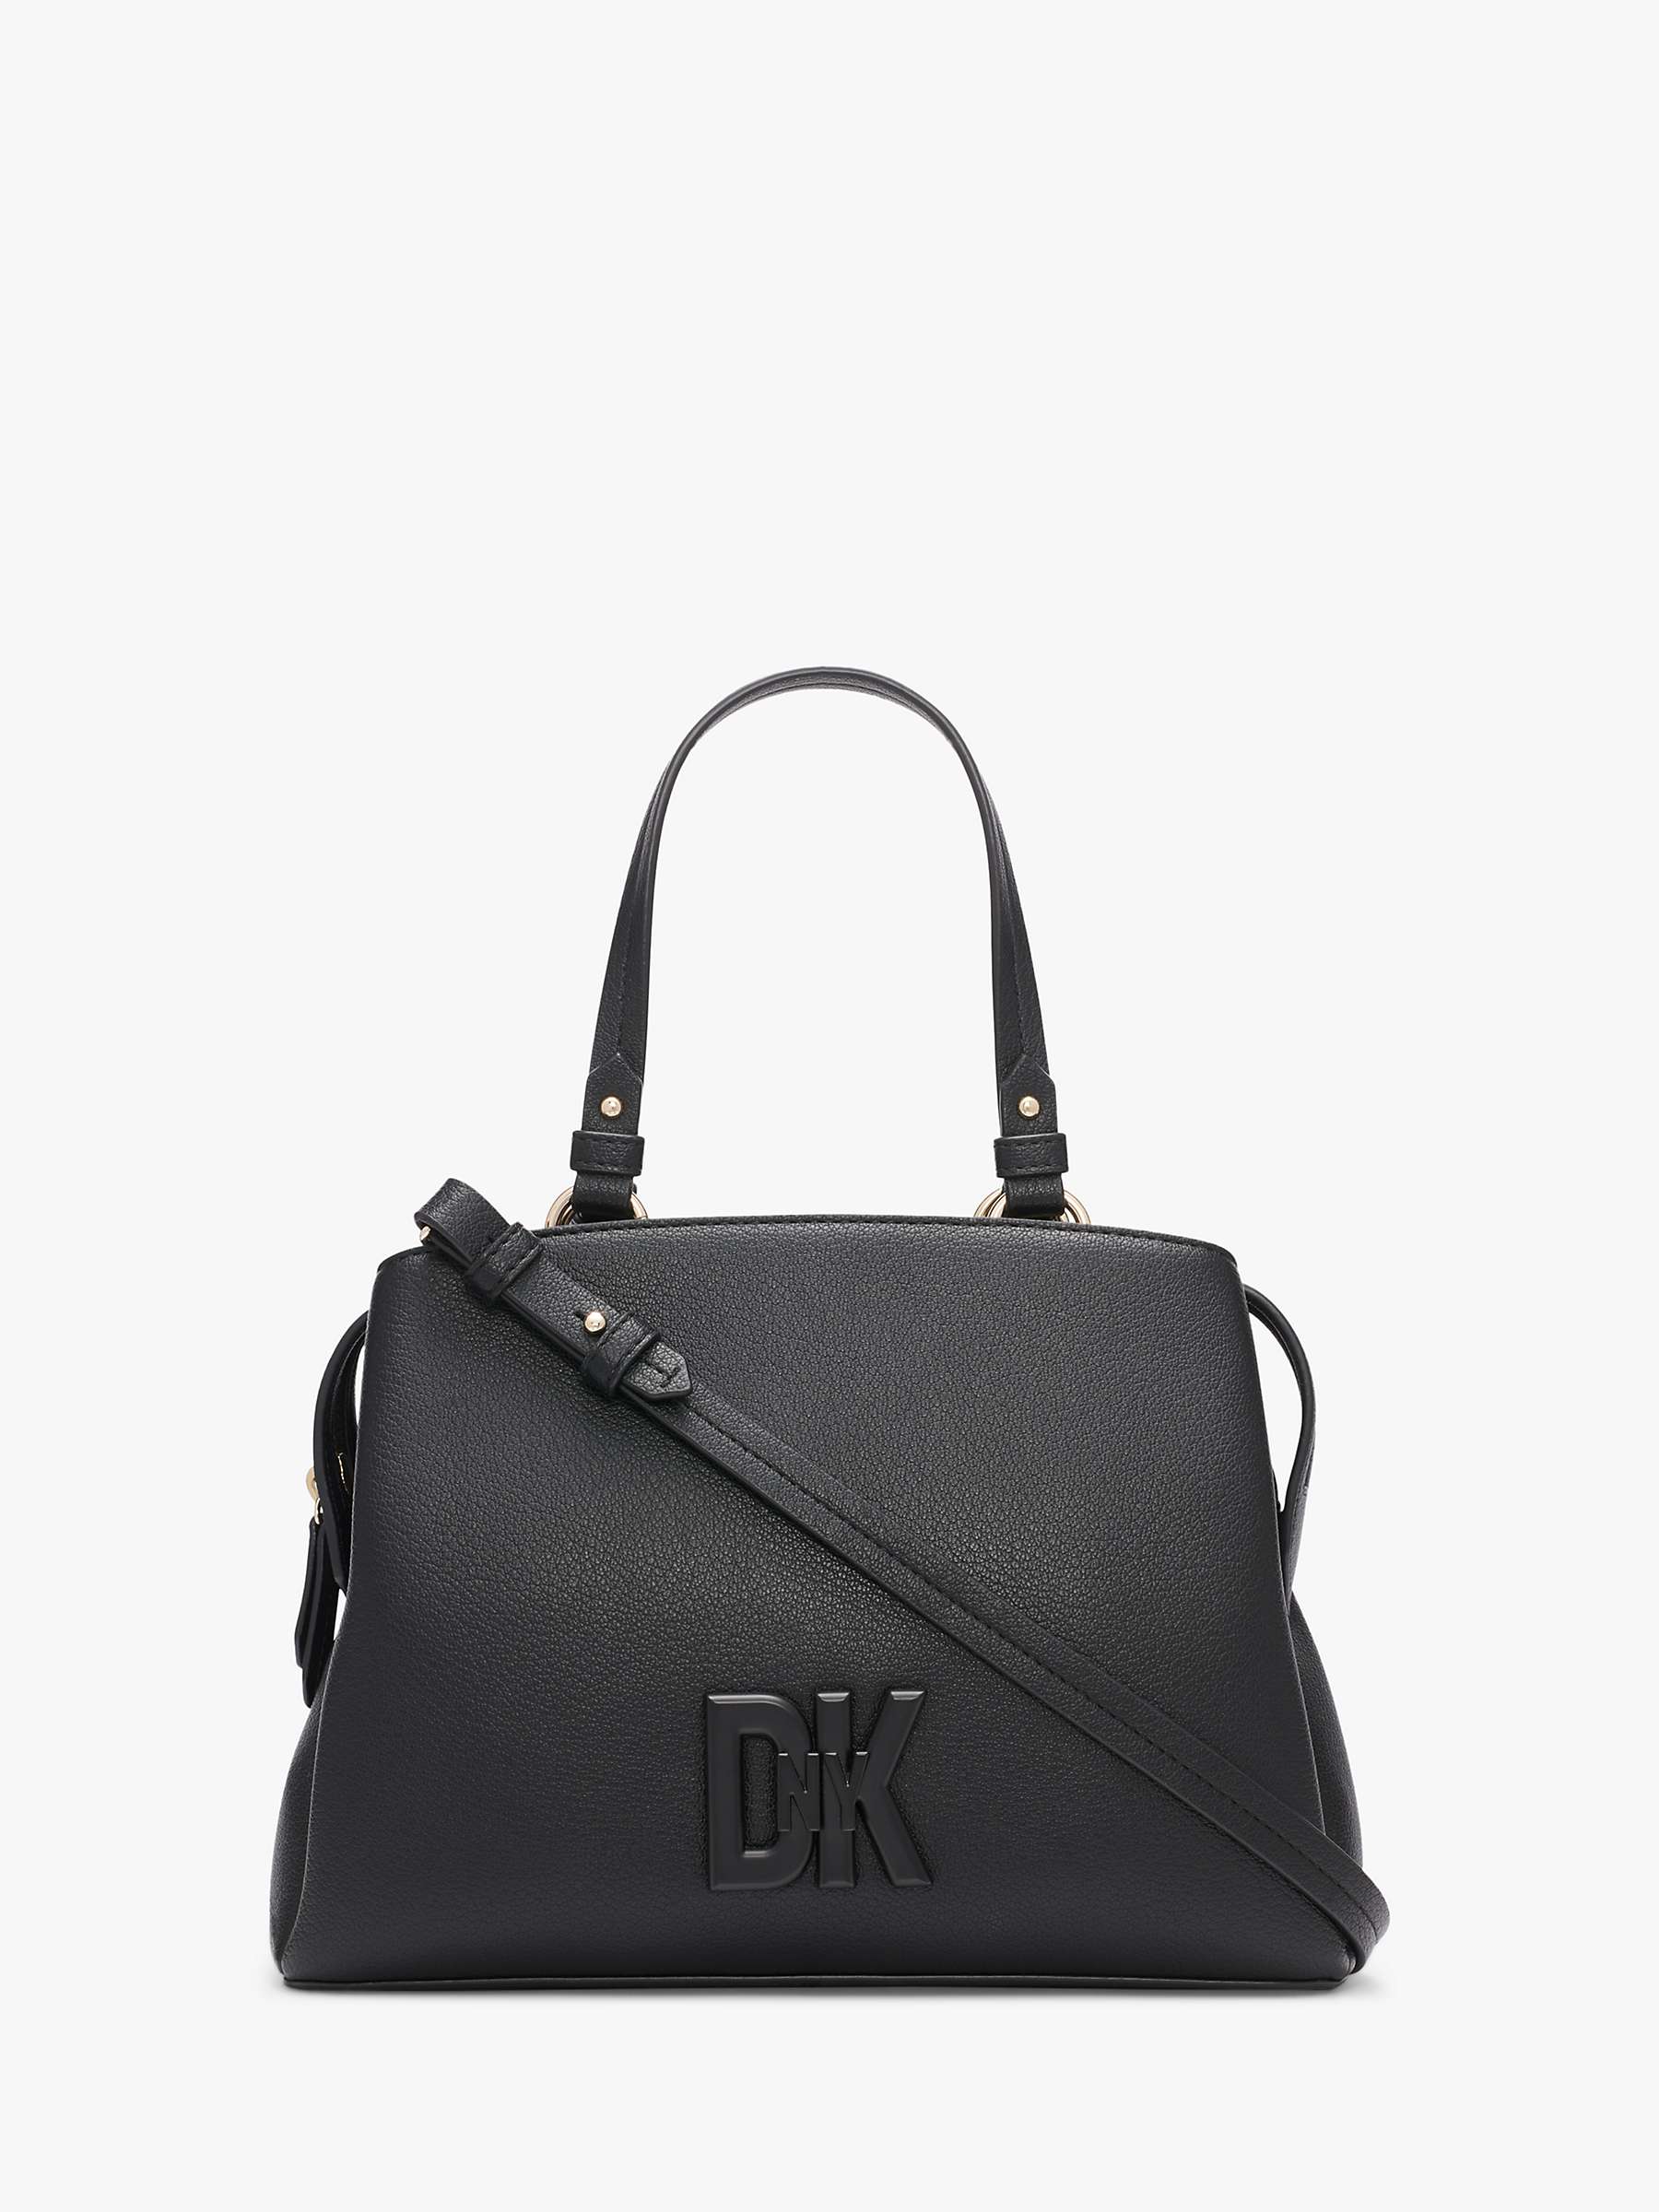 Buy DKNY 7th Avenue Leather Satchel Bag, Black Online at johnlewis.com